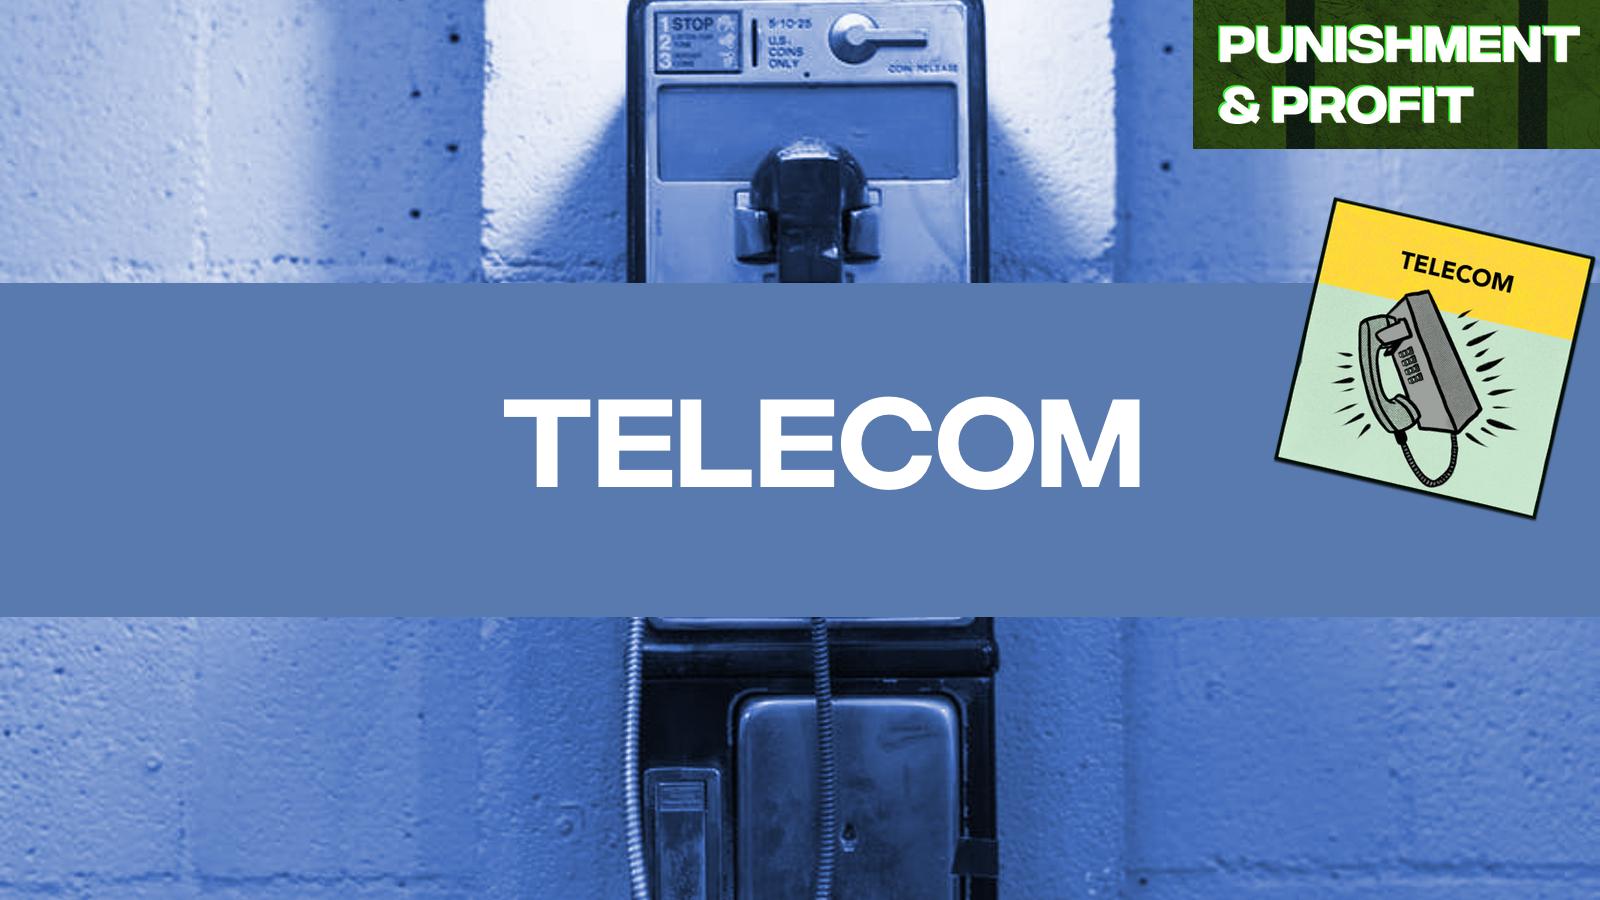 Punishment & Profit: Telecom